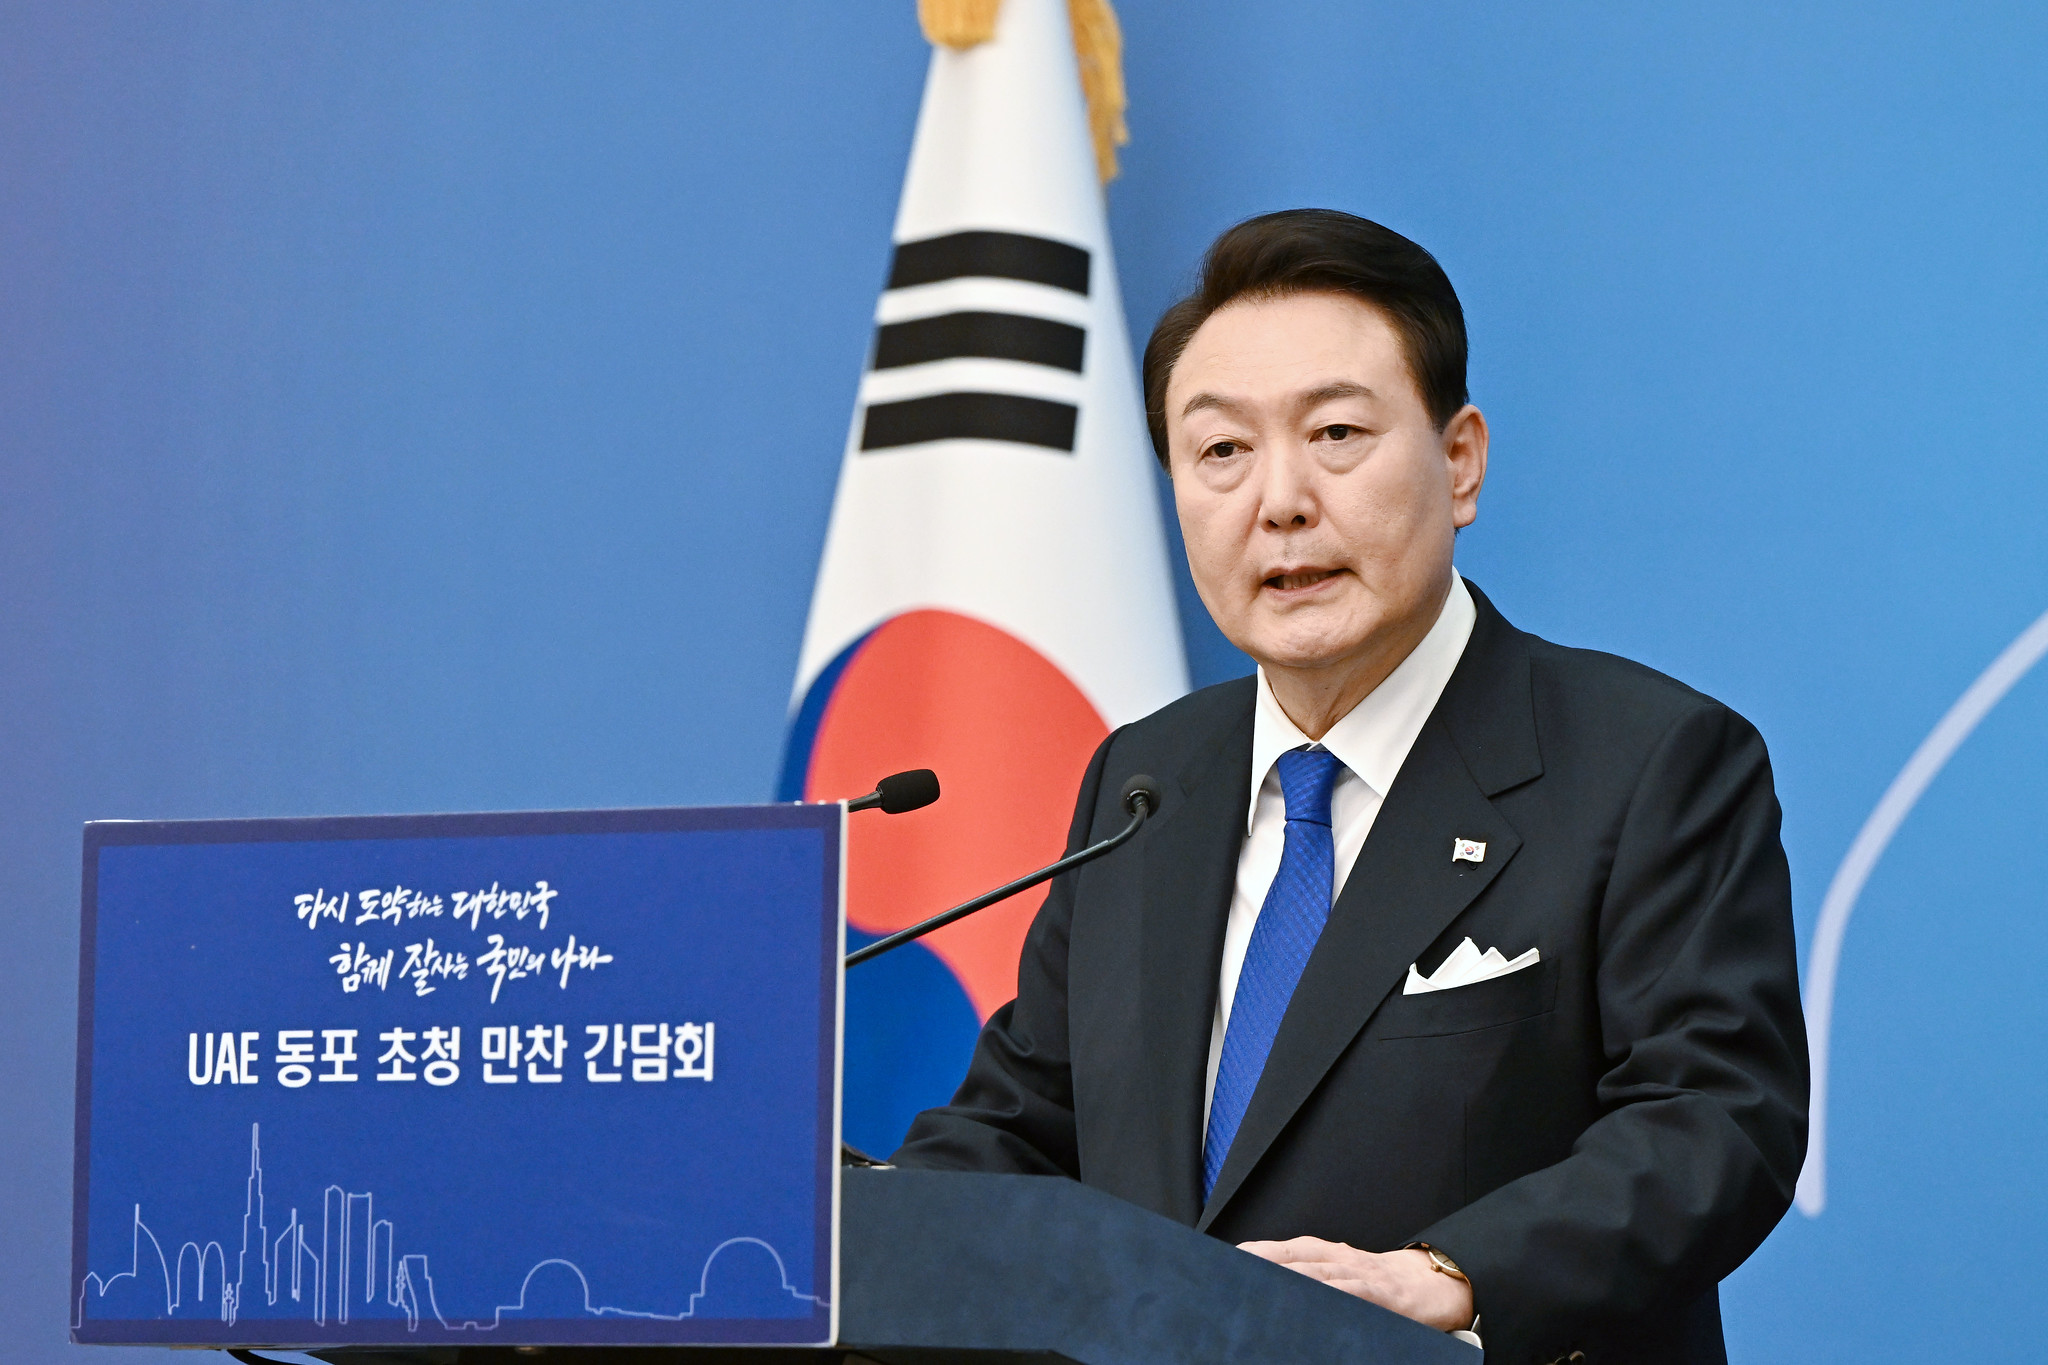 President Image Republic of Korea Flickr